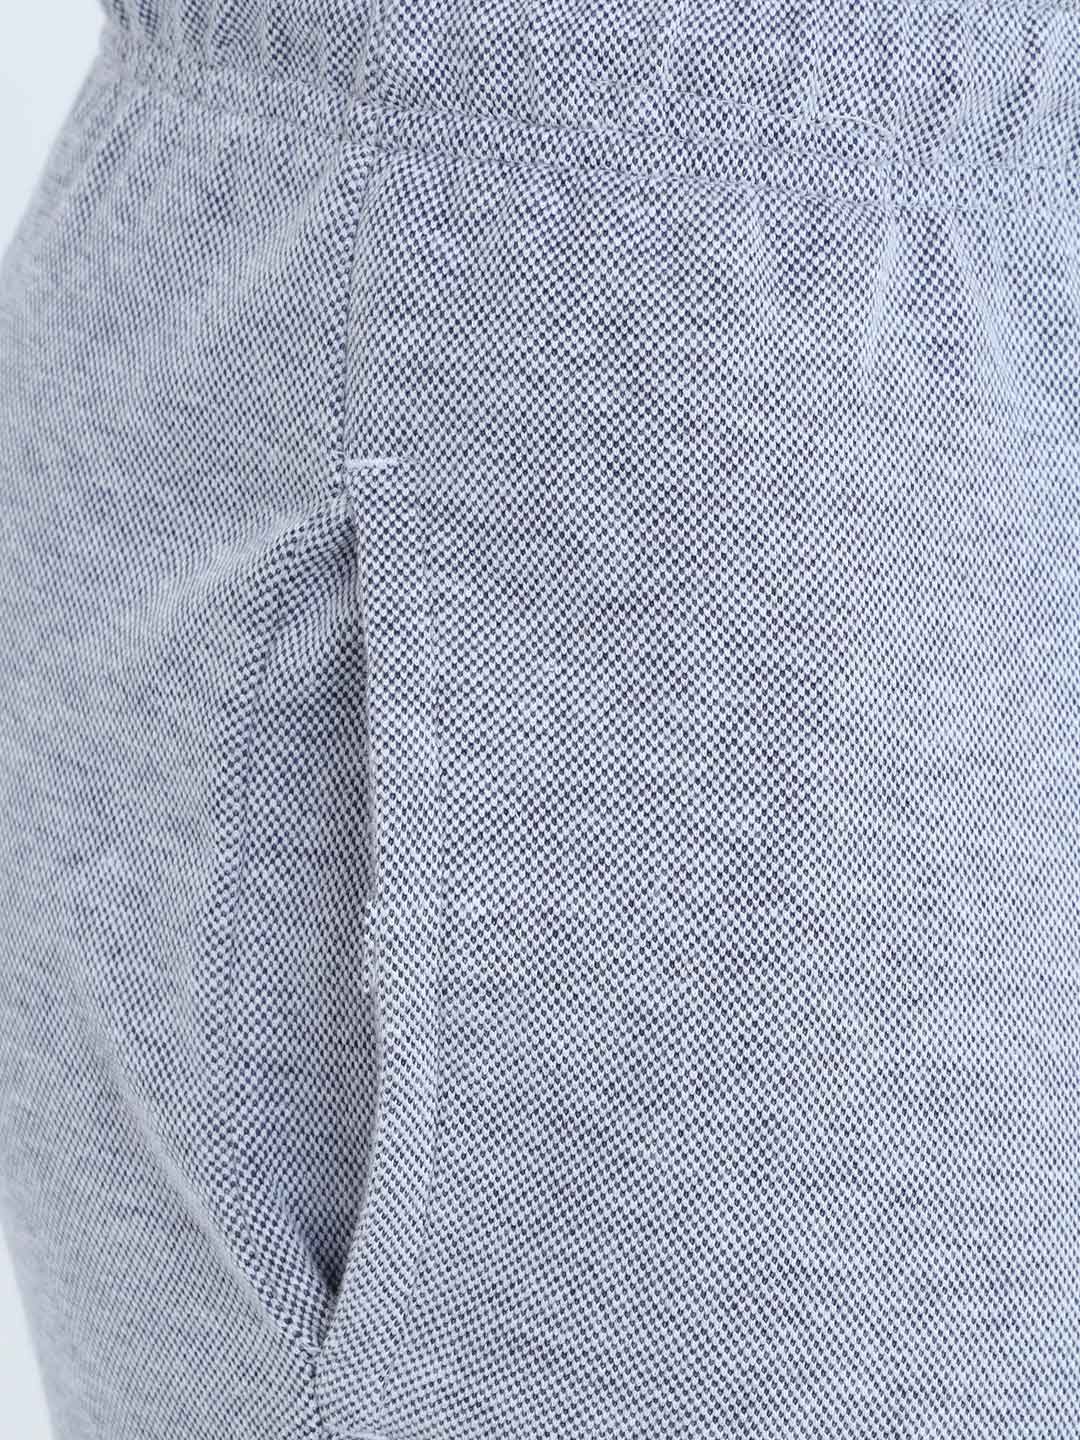 The Hunter Grey Everywear Shorts